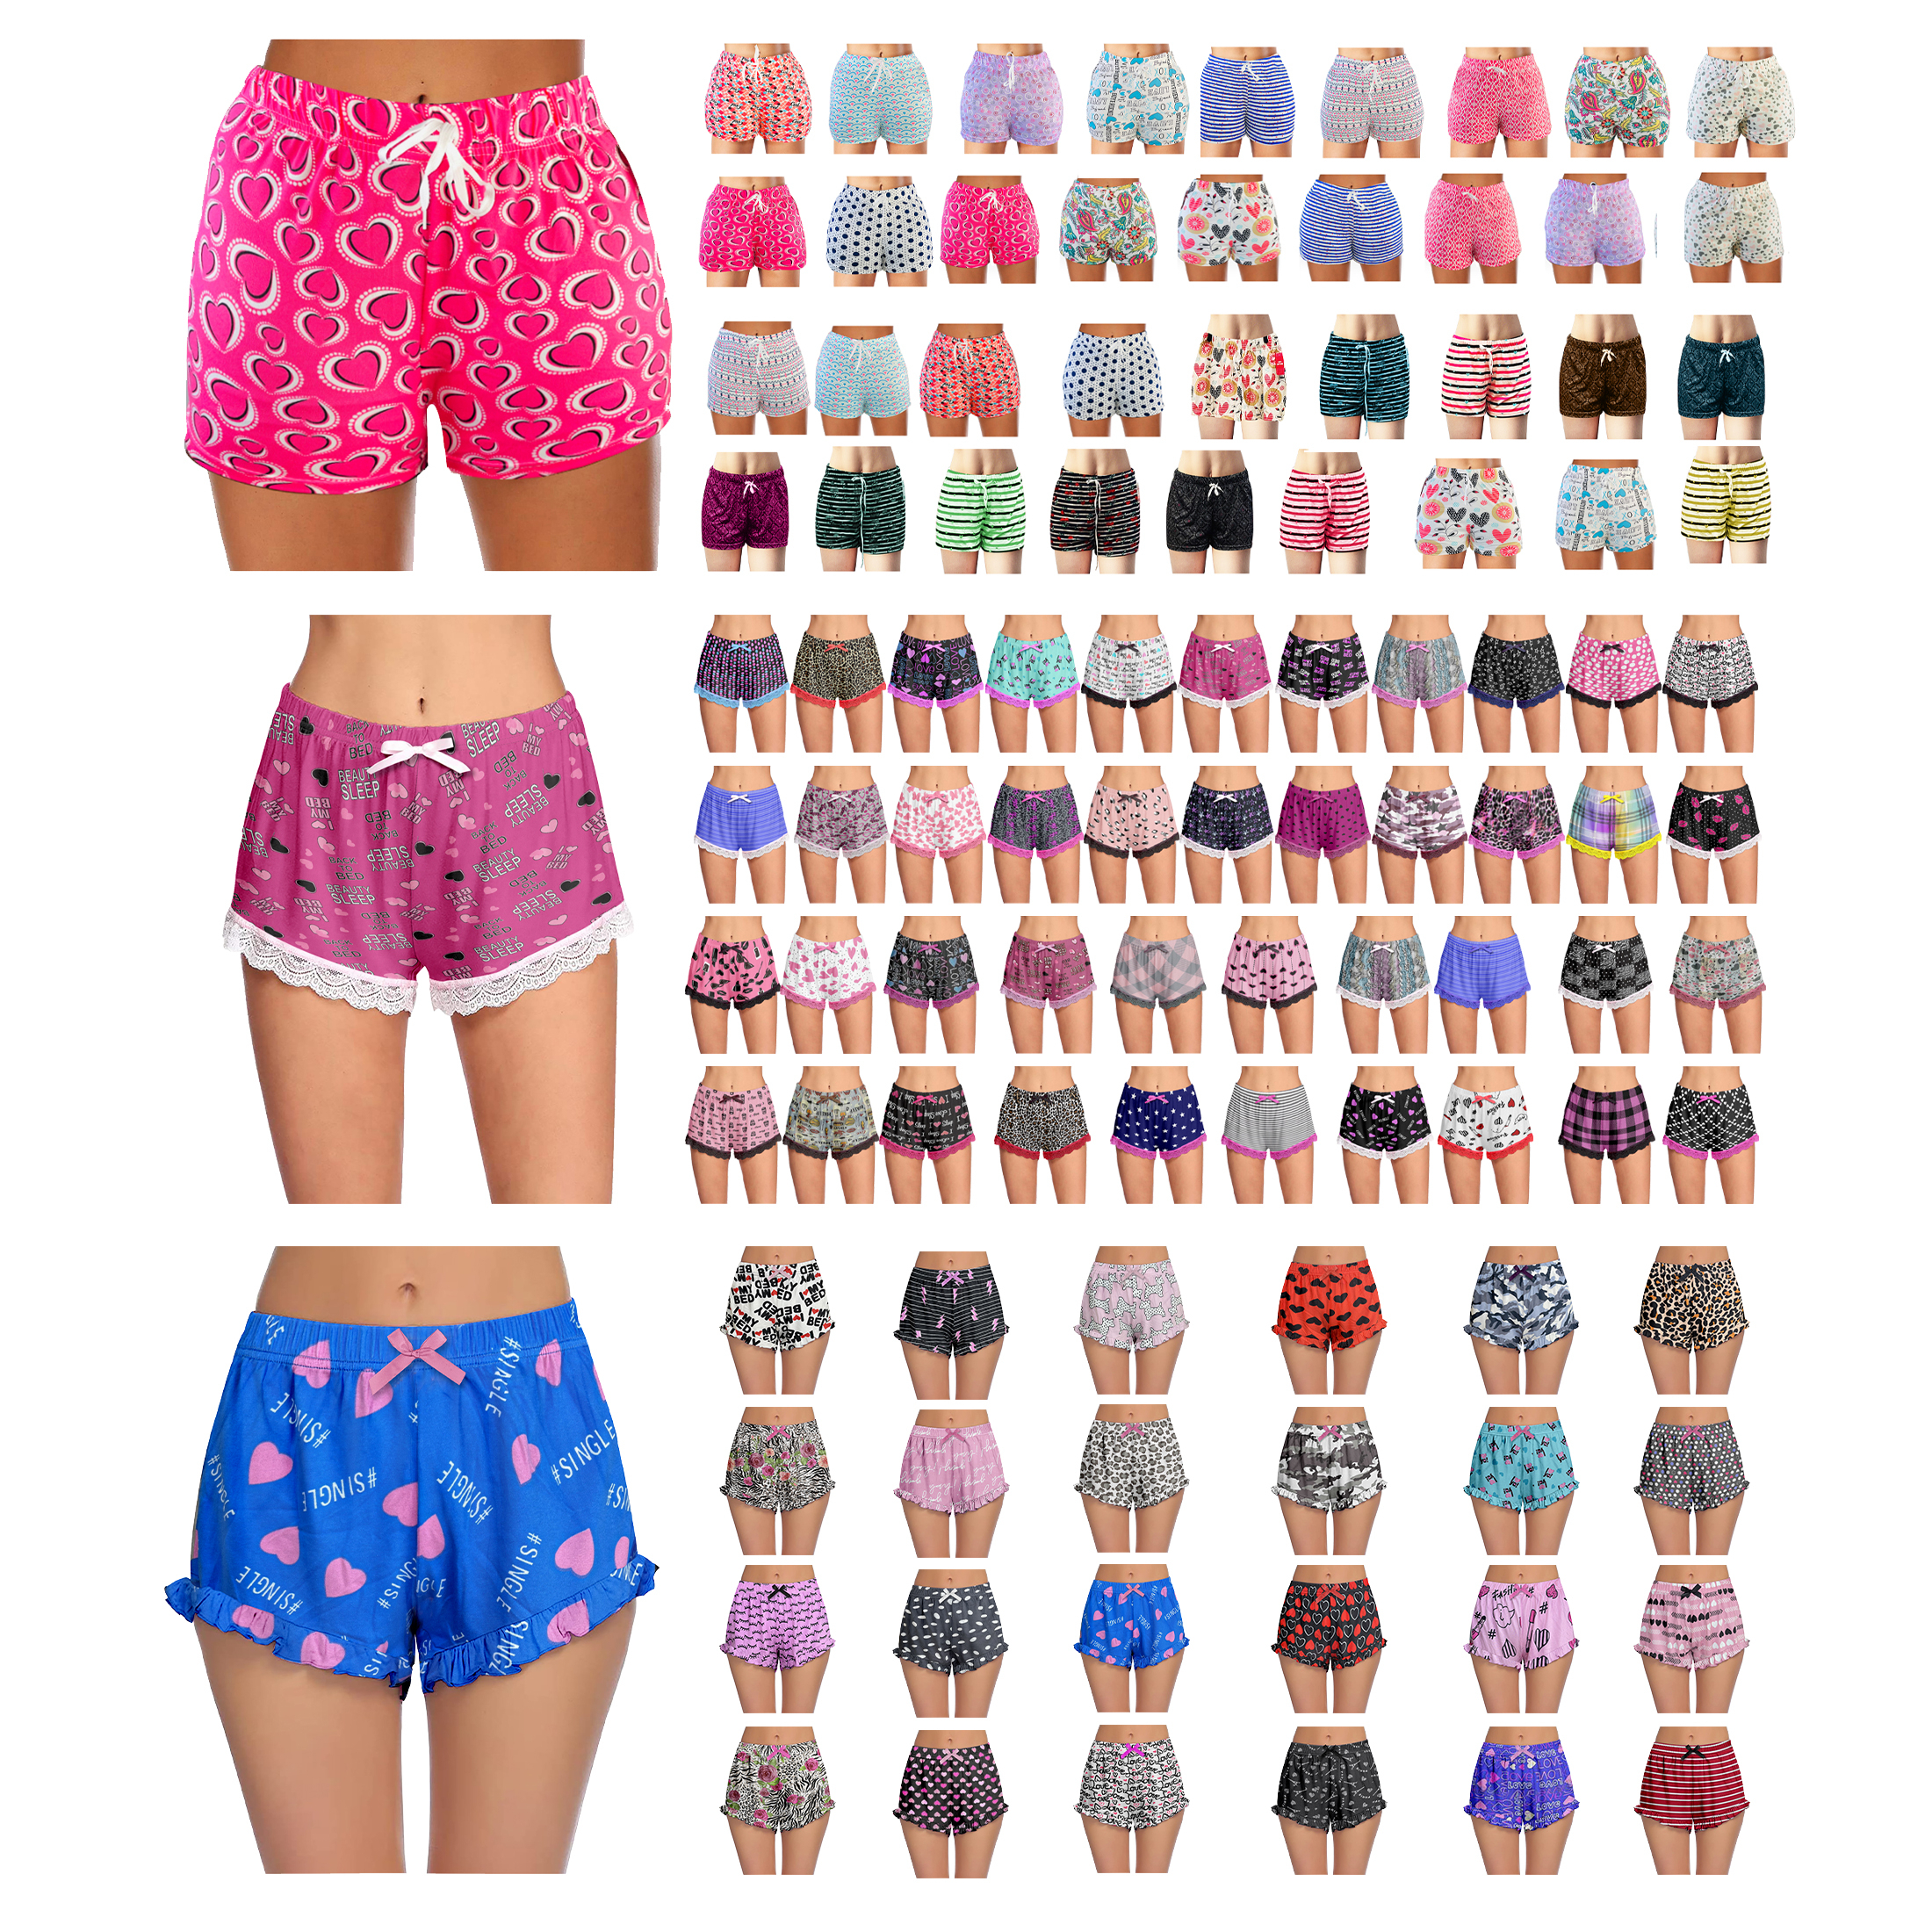 3-Pack: Women's Soft Comfy Printed Lounge Sleep Pajama Shorts - Ruffled Hem, Large